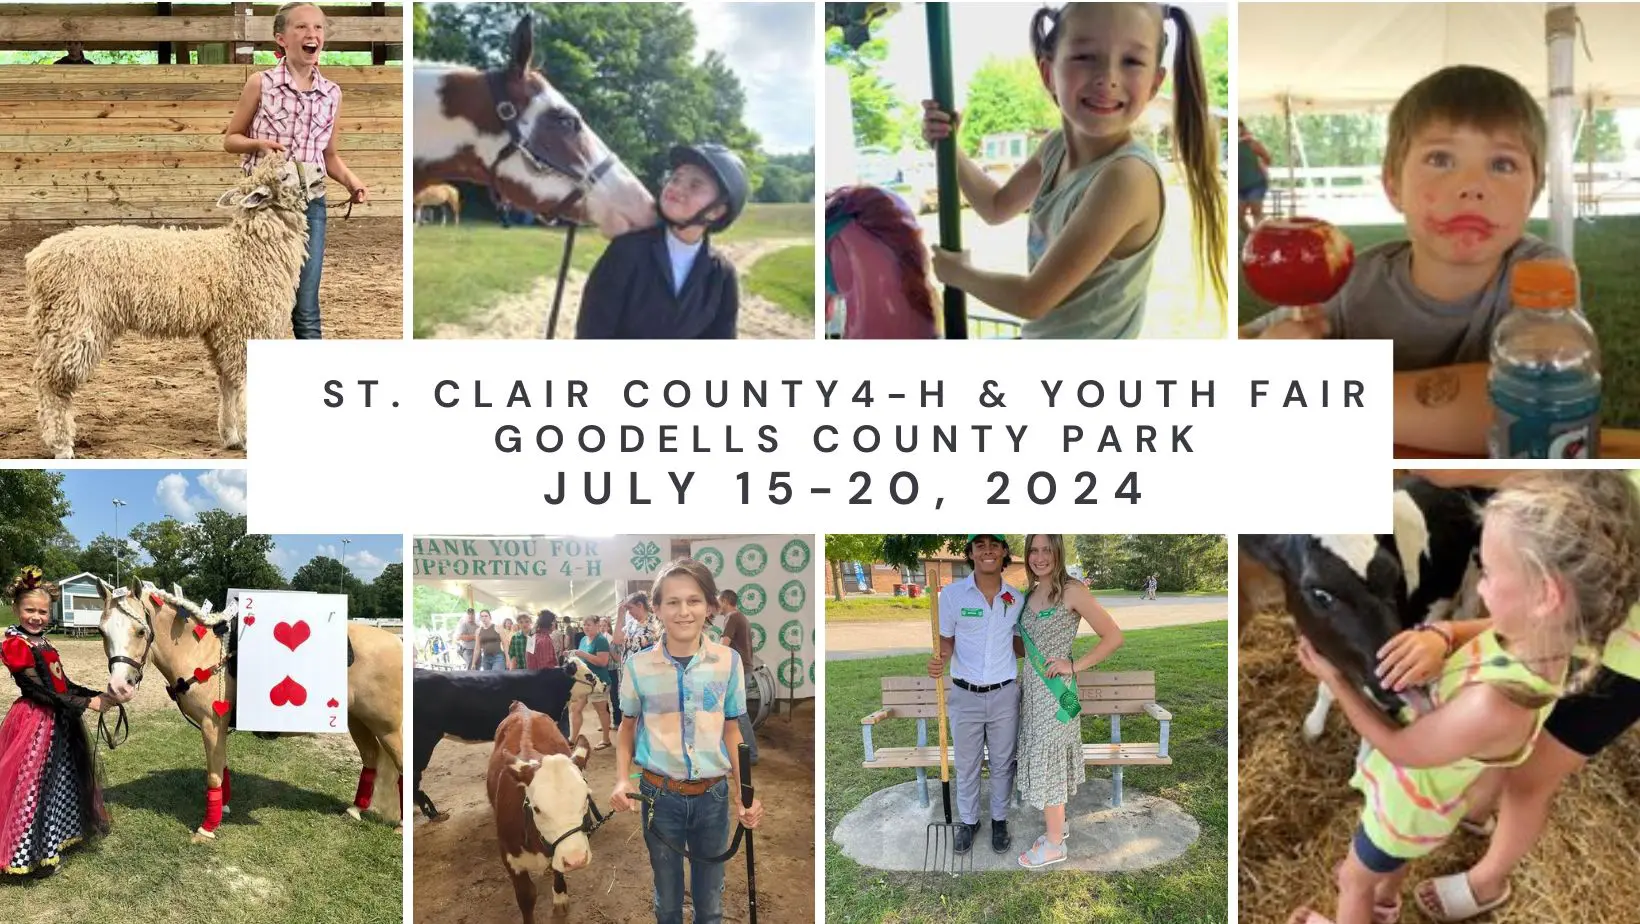 Saint Clair County 4-H and Youth Fair 2024